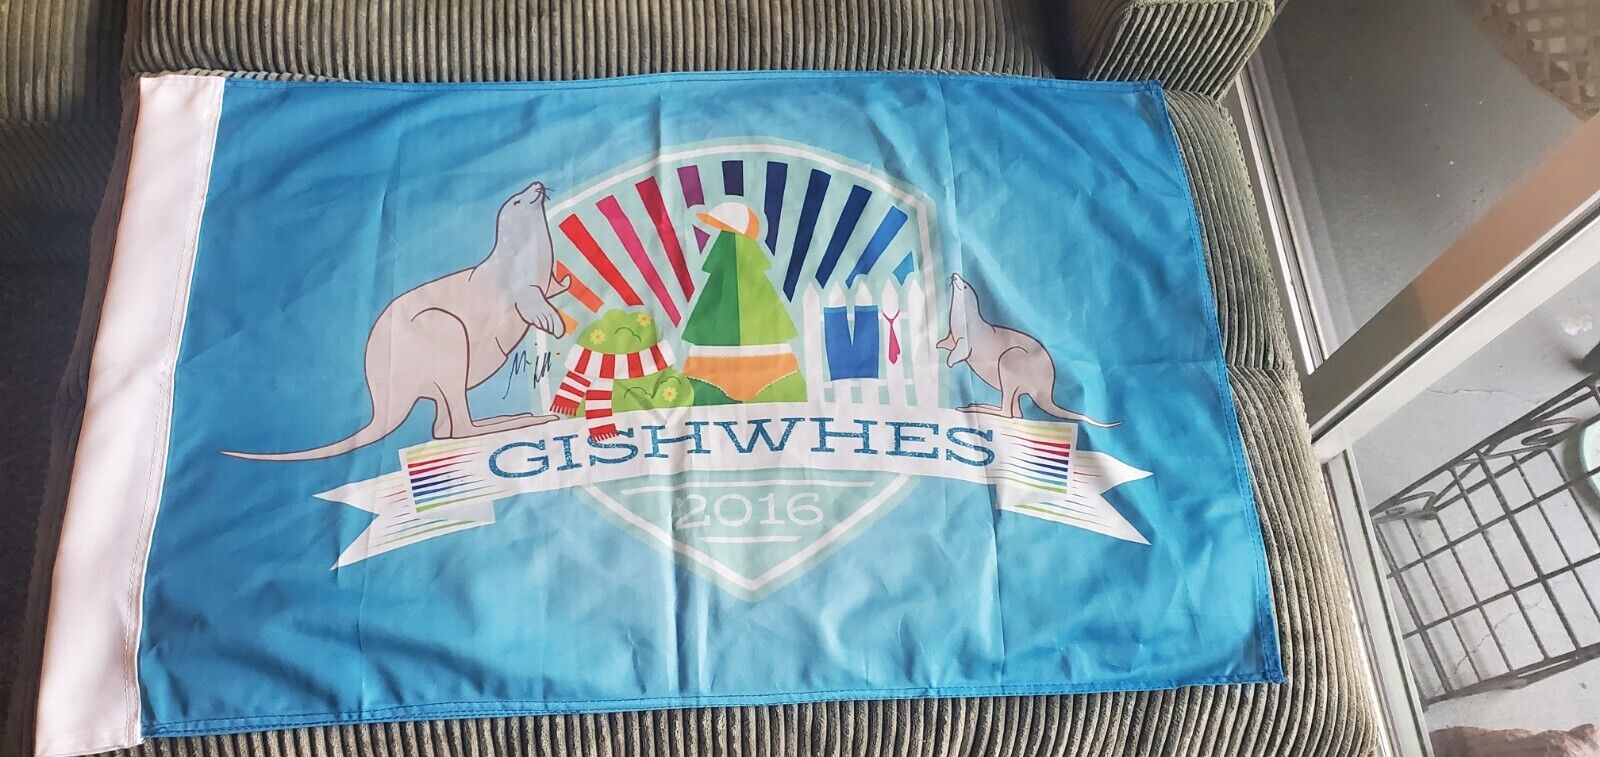 SIGNED by Misha Collins (Supernatural) Gishwhes 2016 Flag